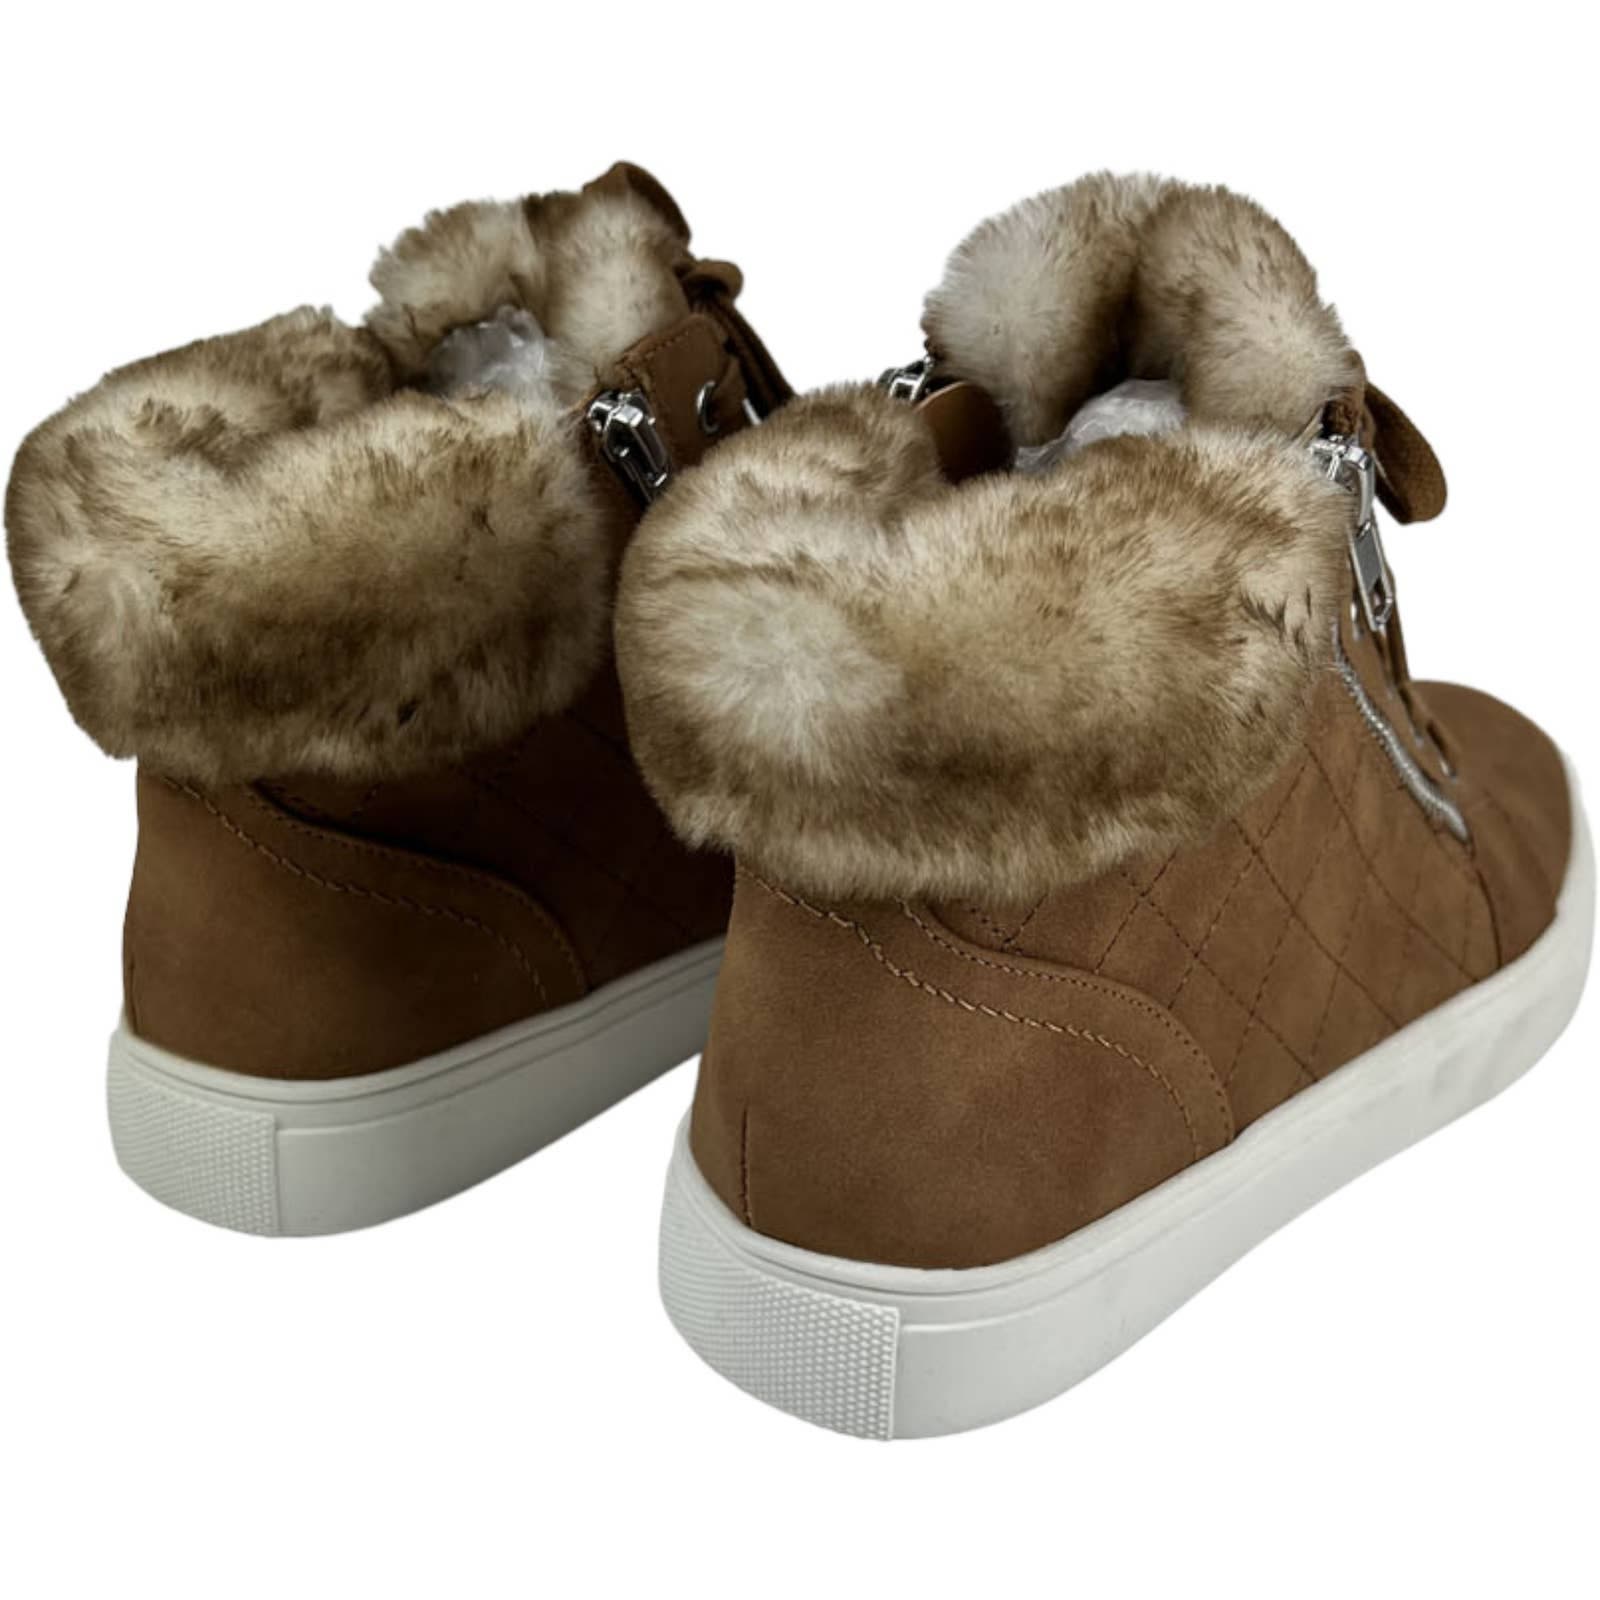 Report Women US 7.5 Tan Brown Shoes Armond Fur High Top Sneaker